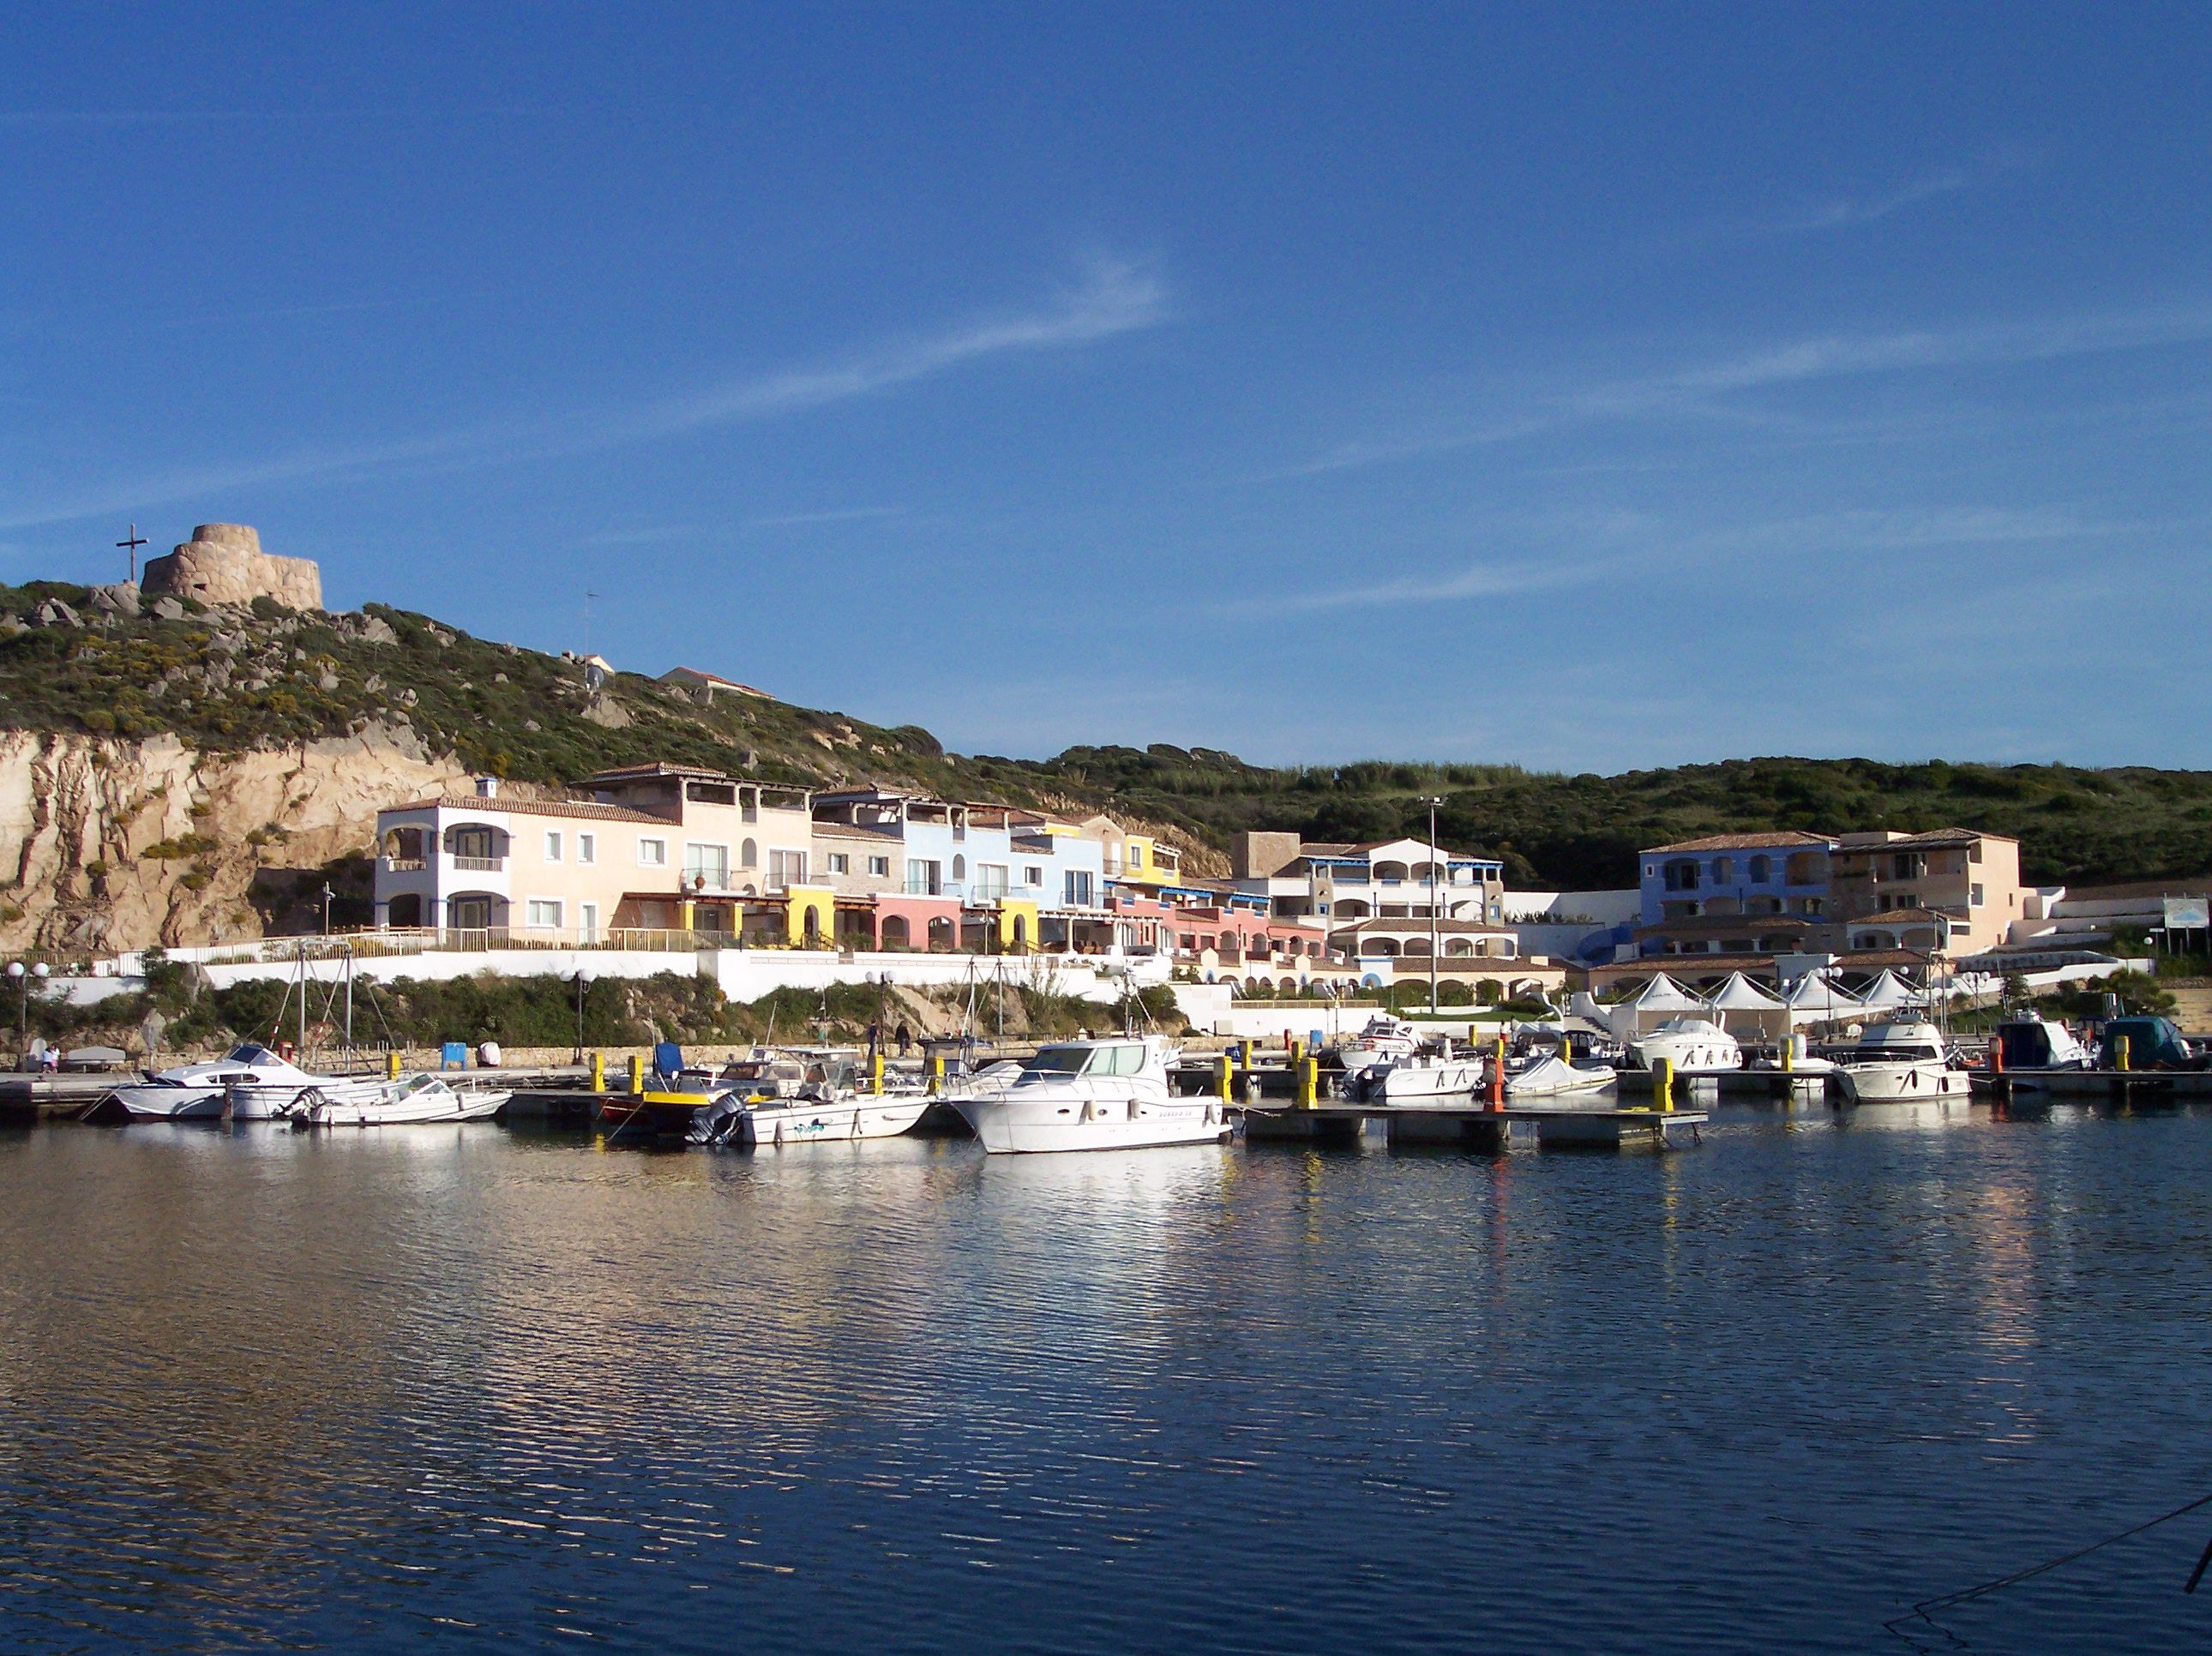 Image of the ferry terminal in Santa Teresa Gallura